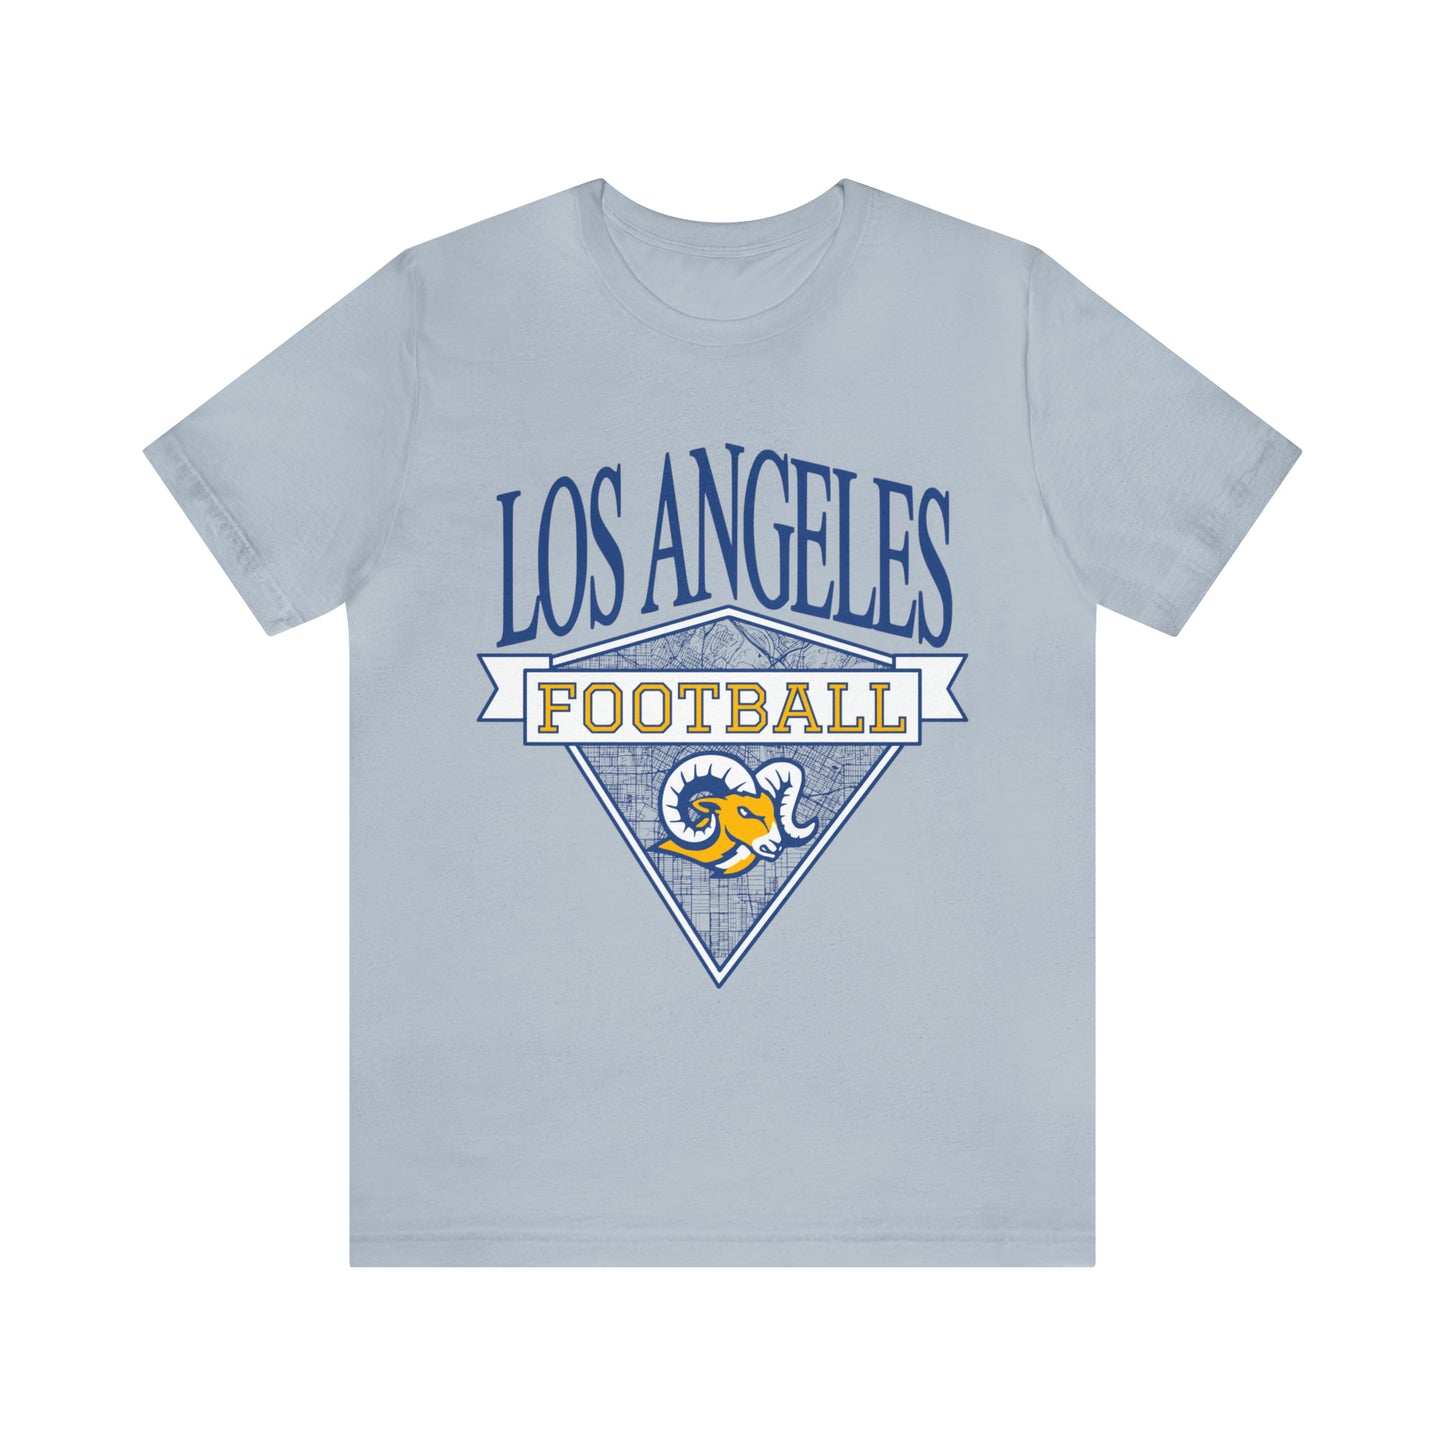 Vintage Los Angeles Rams Tee - Retro California Football T-Shirt Apparel - Men's & Women's Unisex Sizing - Design 1